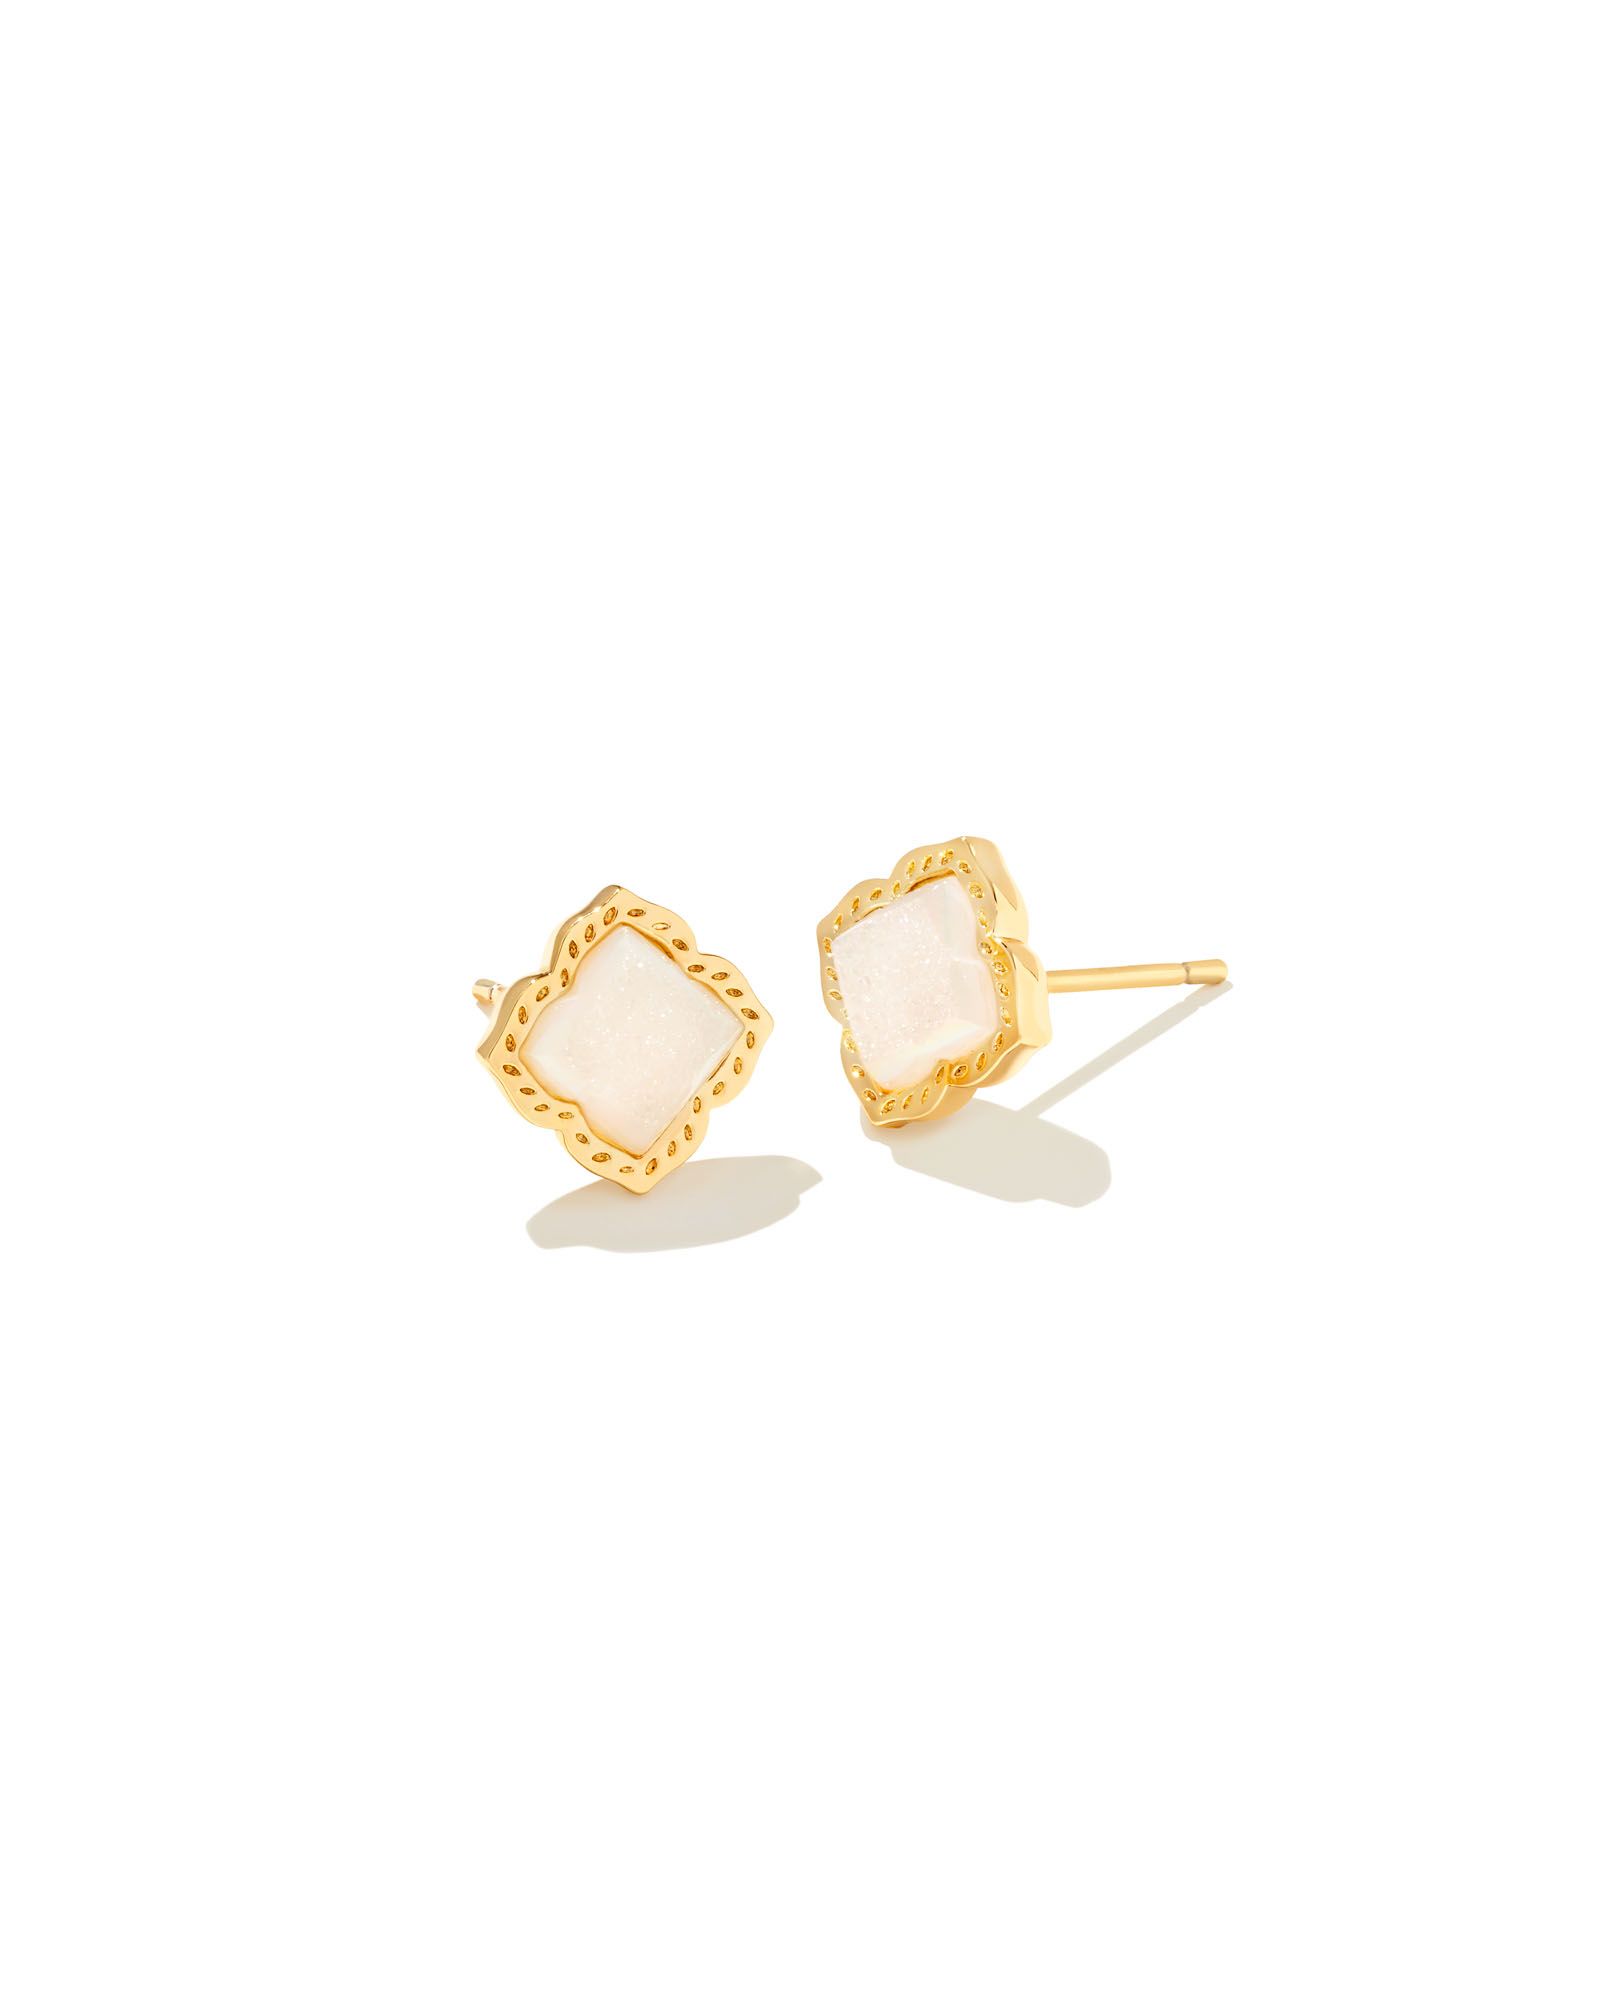 Mallory Gold Stud Earrings in Iridescent Drusy | Kendra Scott | Kendra Scott